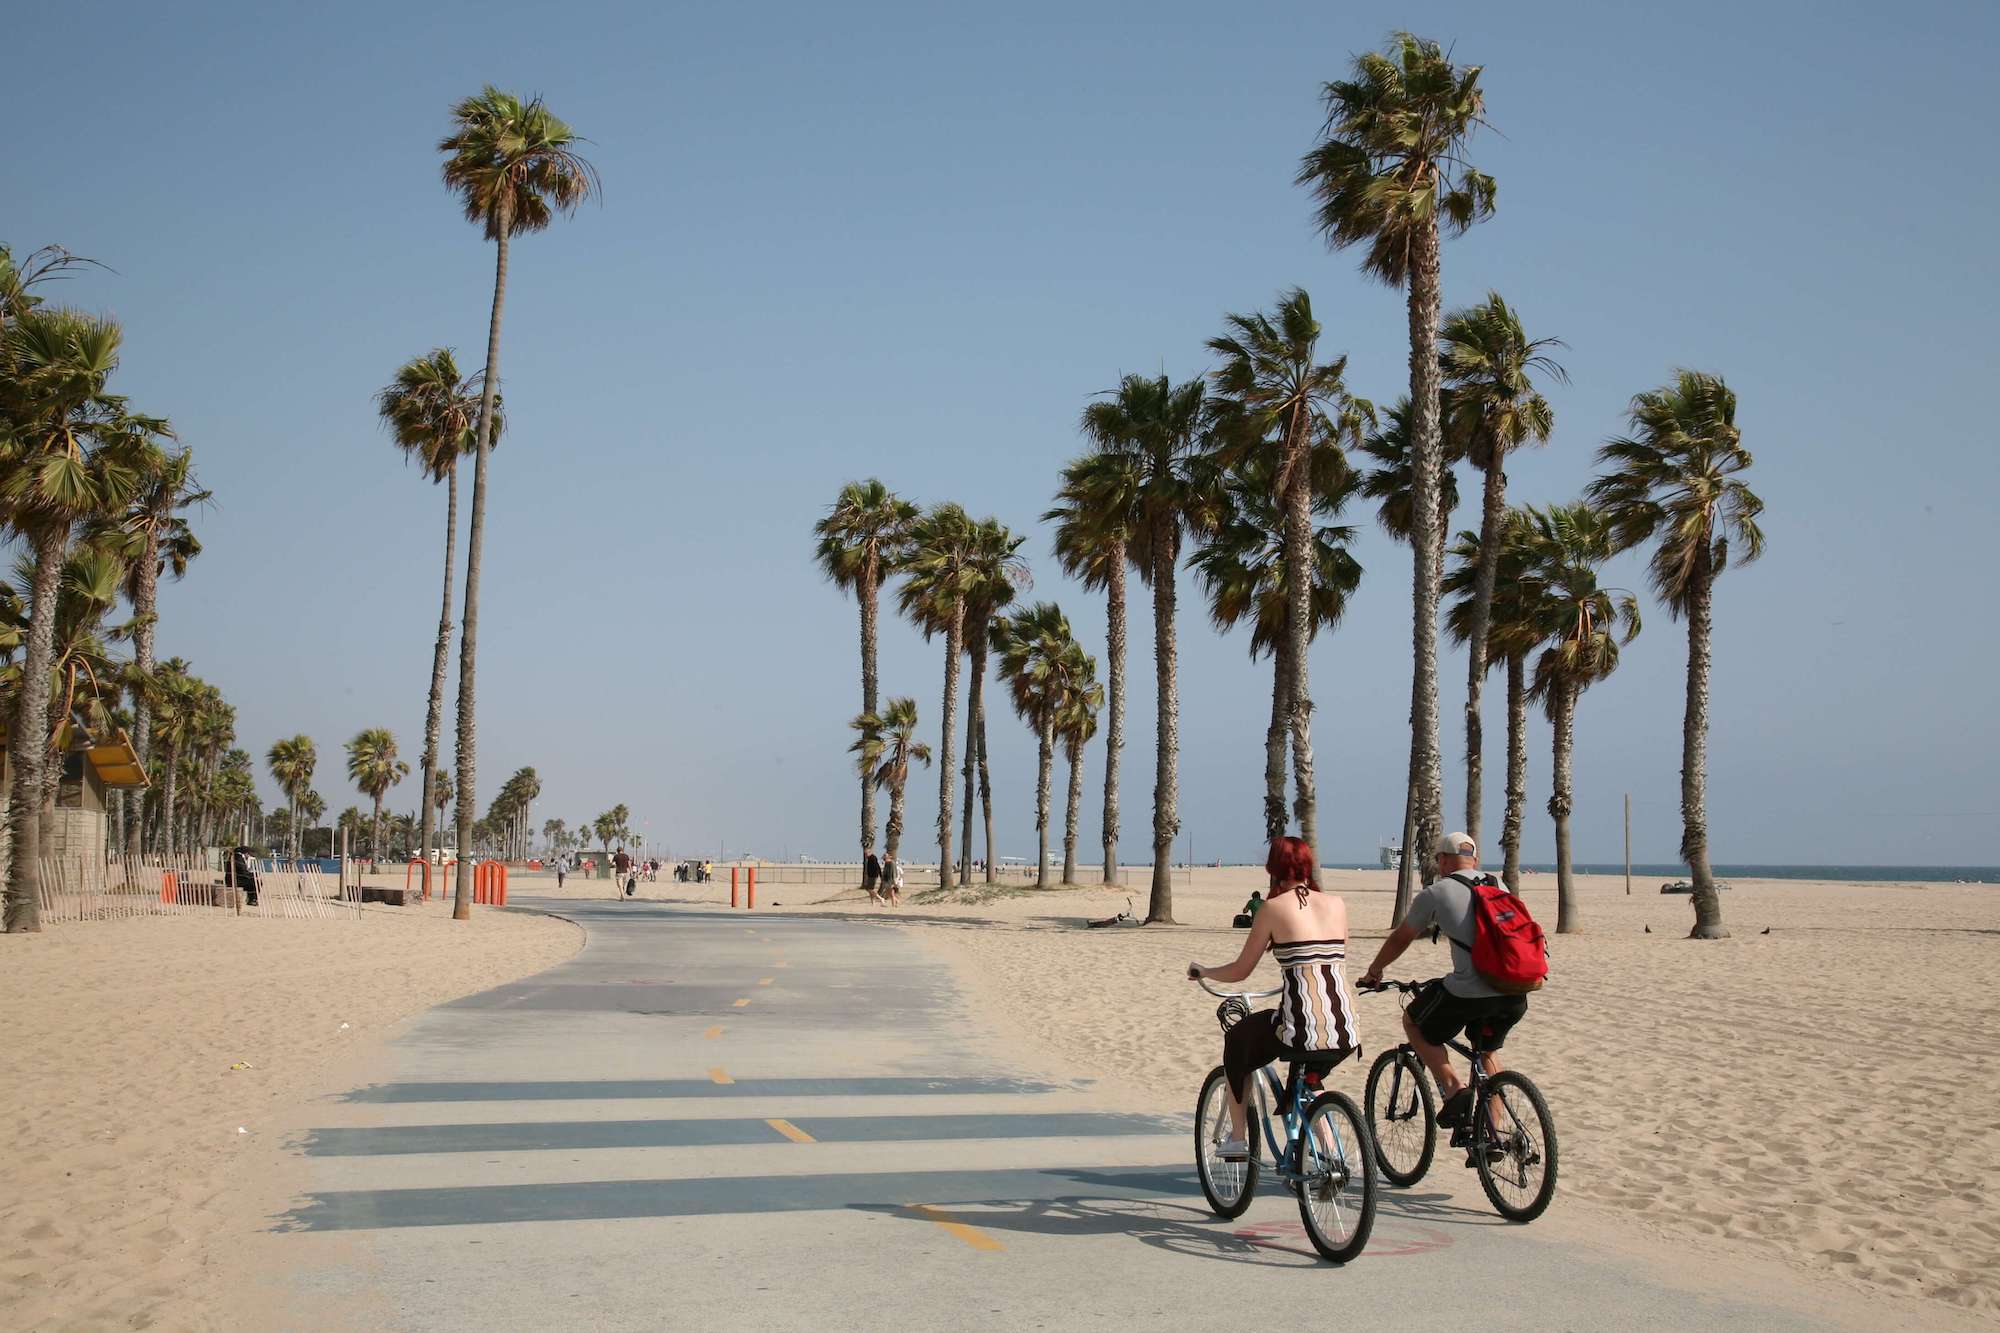 Cyclists on Santa Monica bike path in Los Angeles